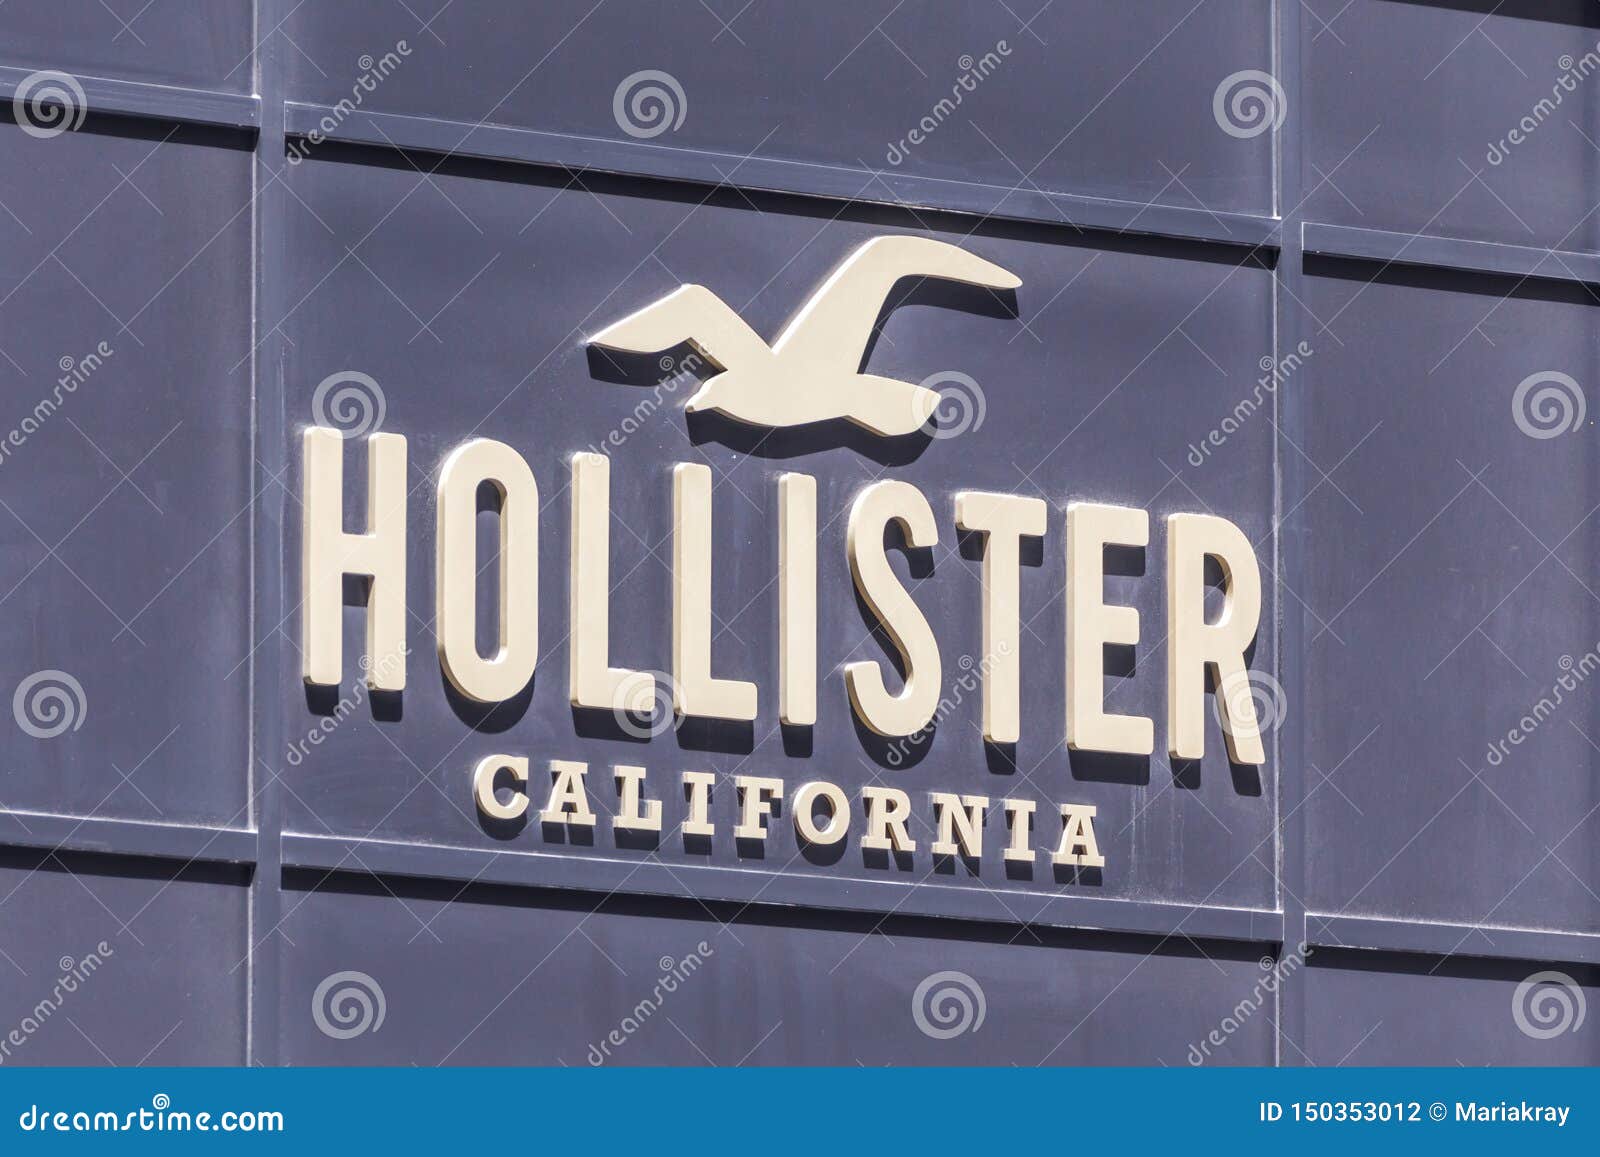 hollister california brand